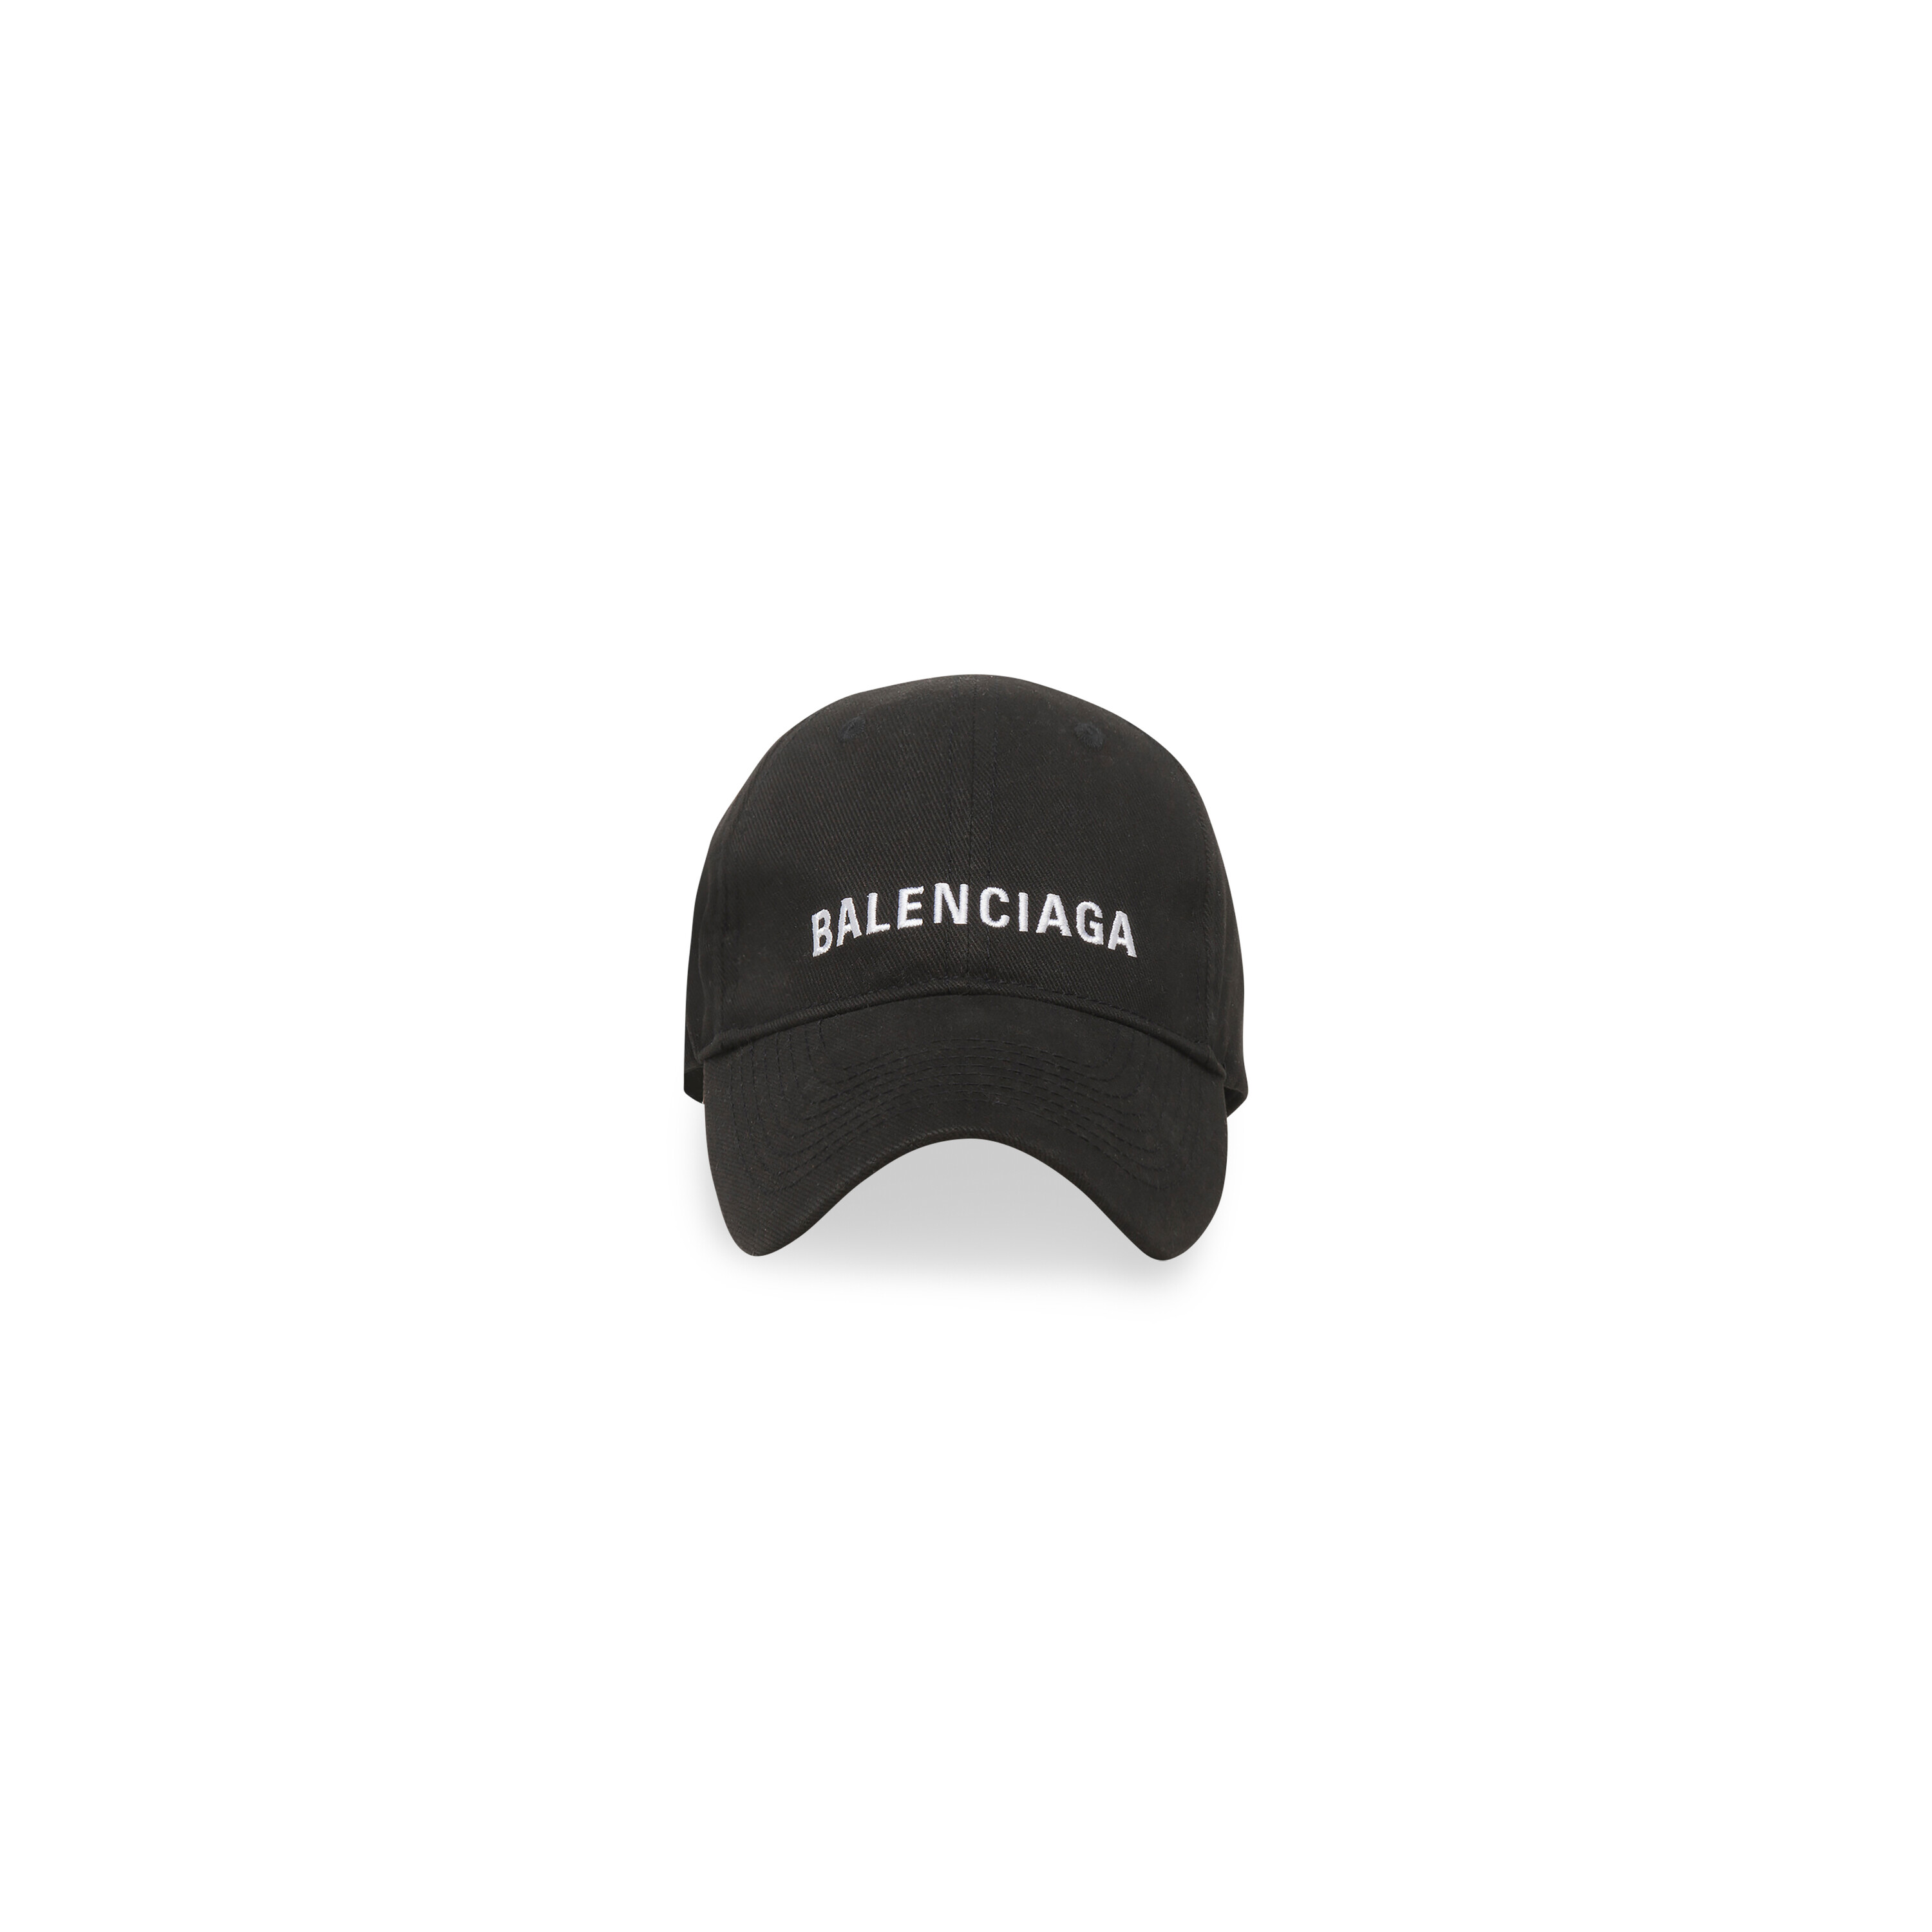 BALENCIAGA バレンシアガ 23SS HEAVY PIERCING CAP ヘビーピアスキャップ ヴィンテージ加工 ベースボールキャップ 帽子 ブラック